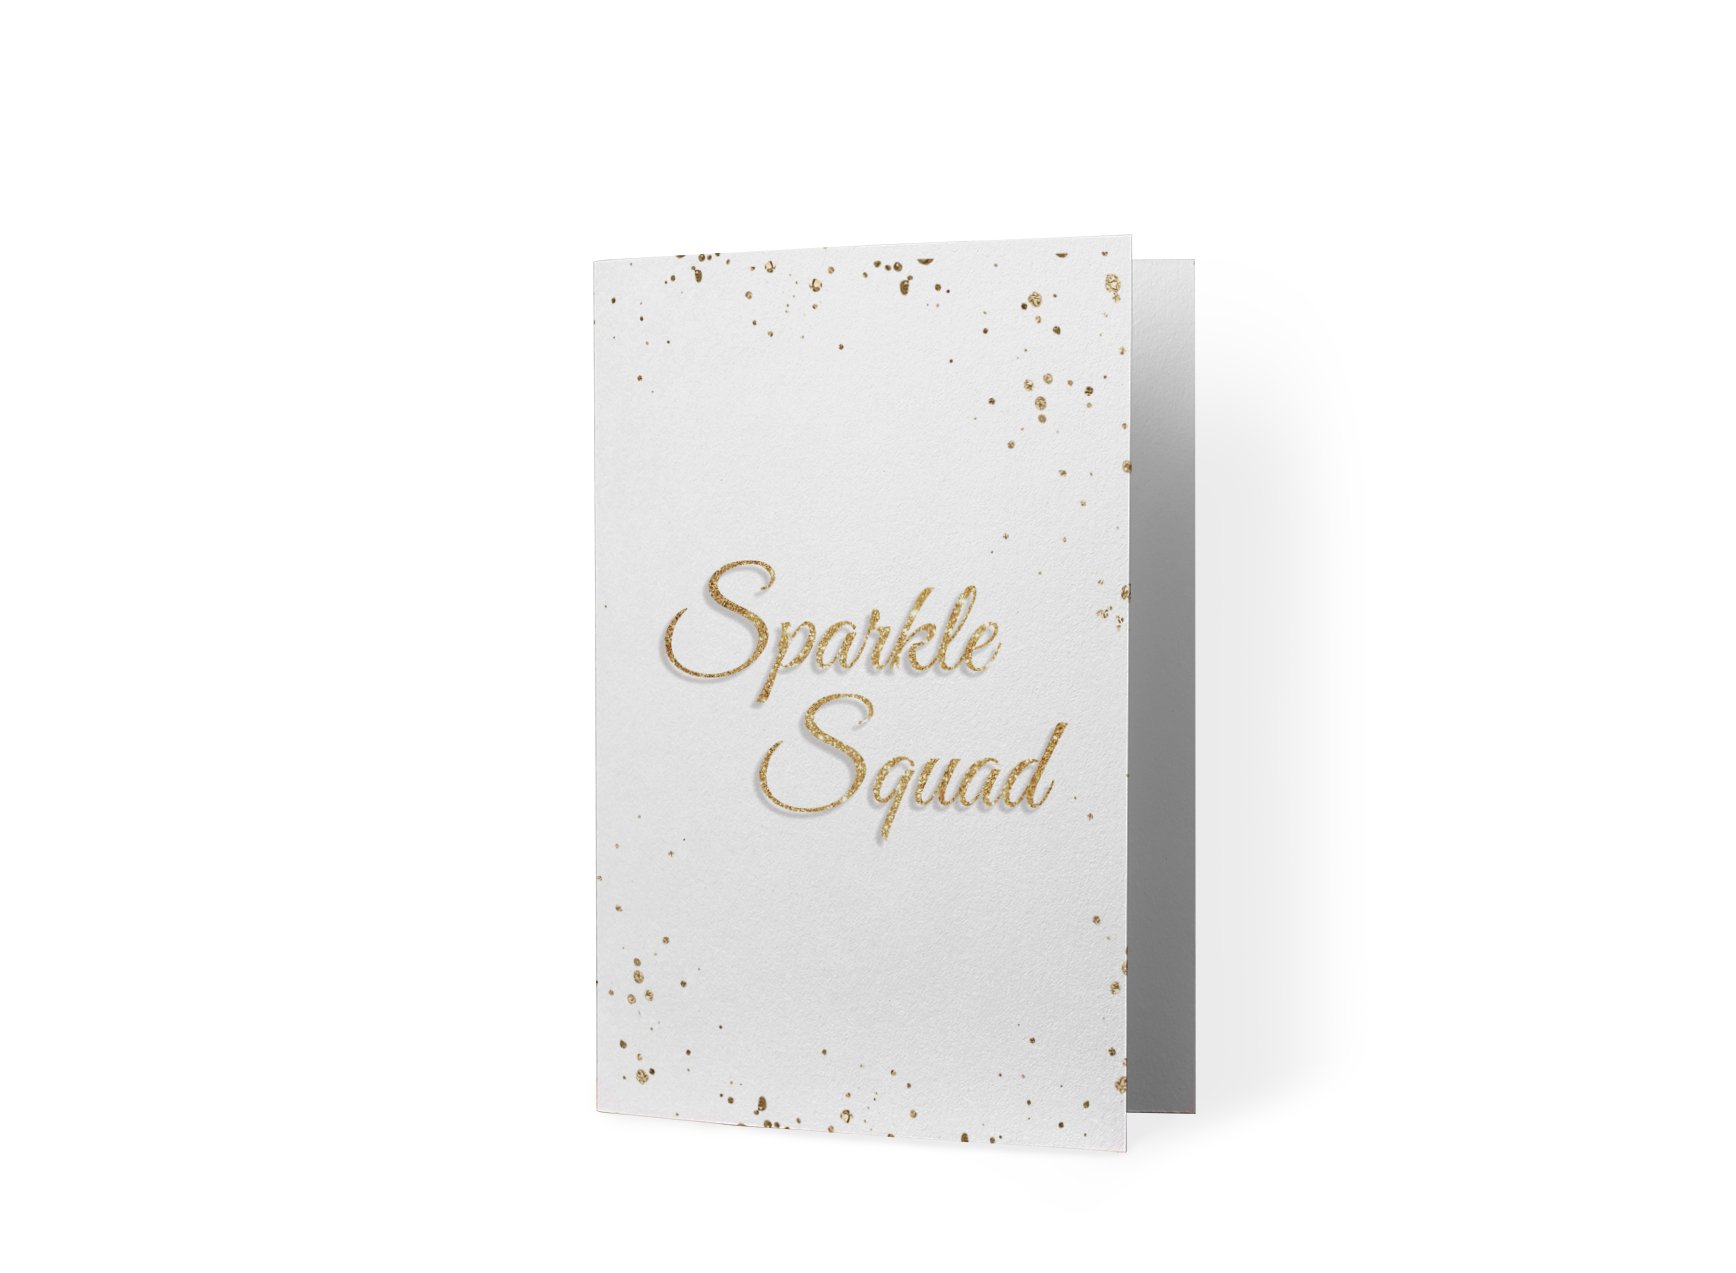 Sparkle Squad WHITE - TSWM Gift Card Mockup.jpg